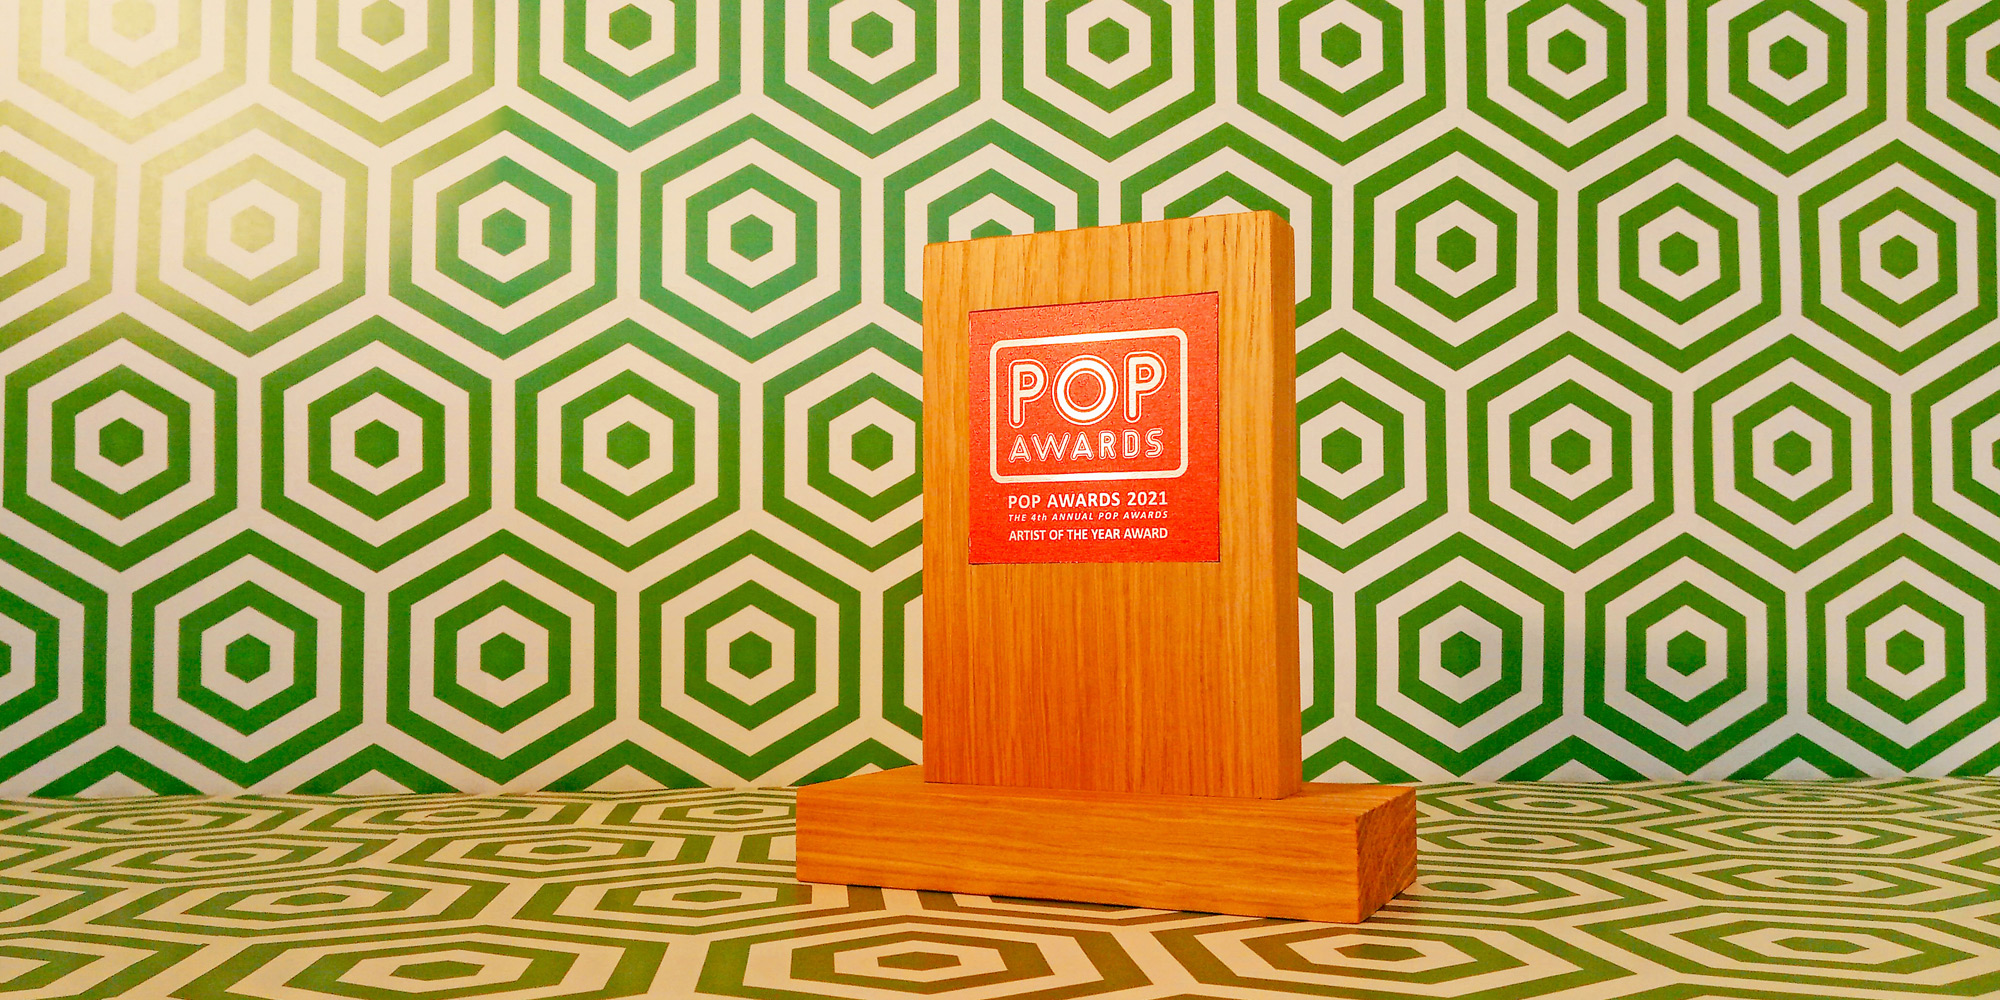 Gallery Pop Awards 2021 POP MAGAZINE